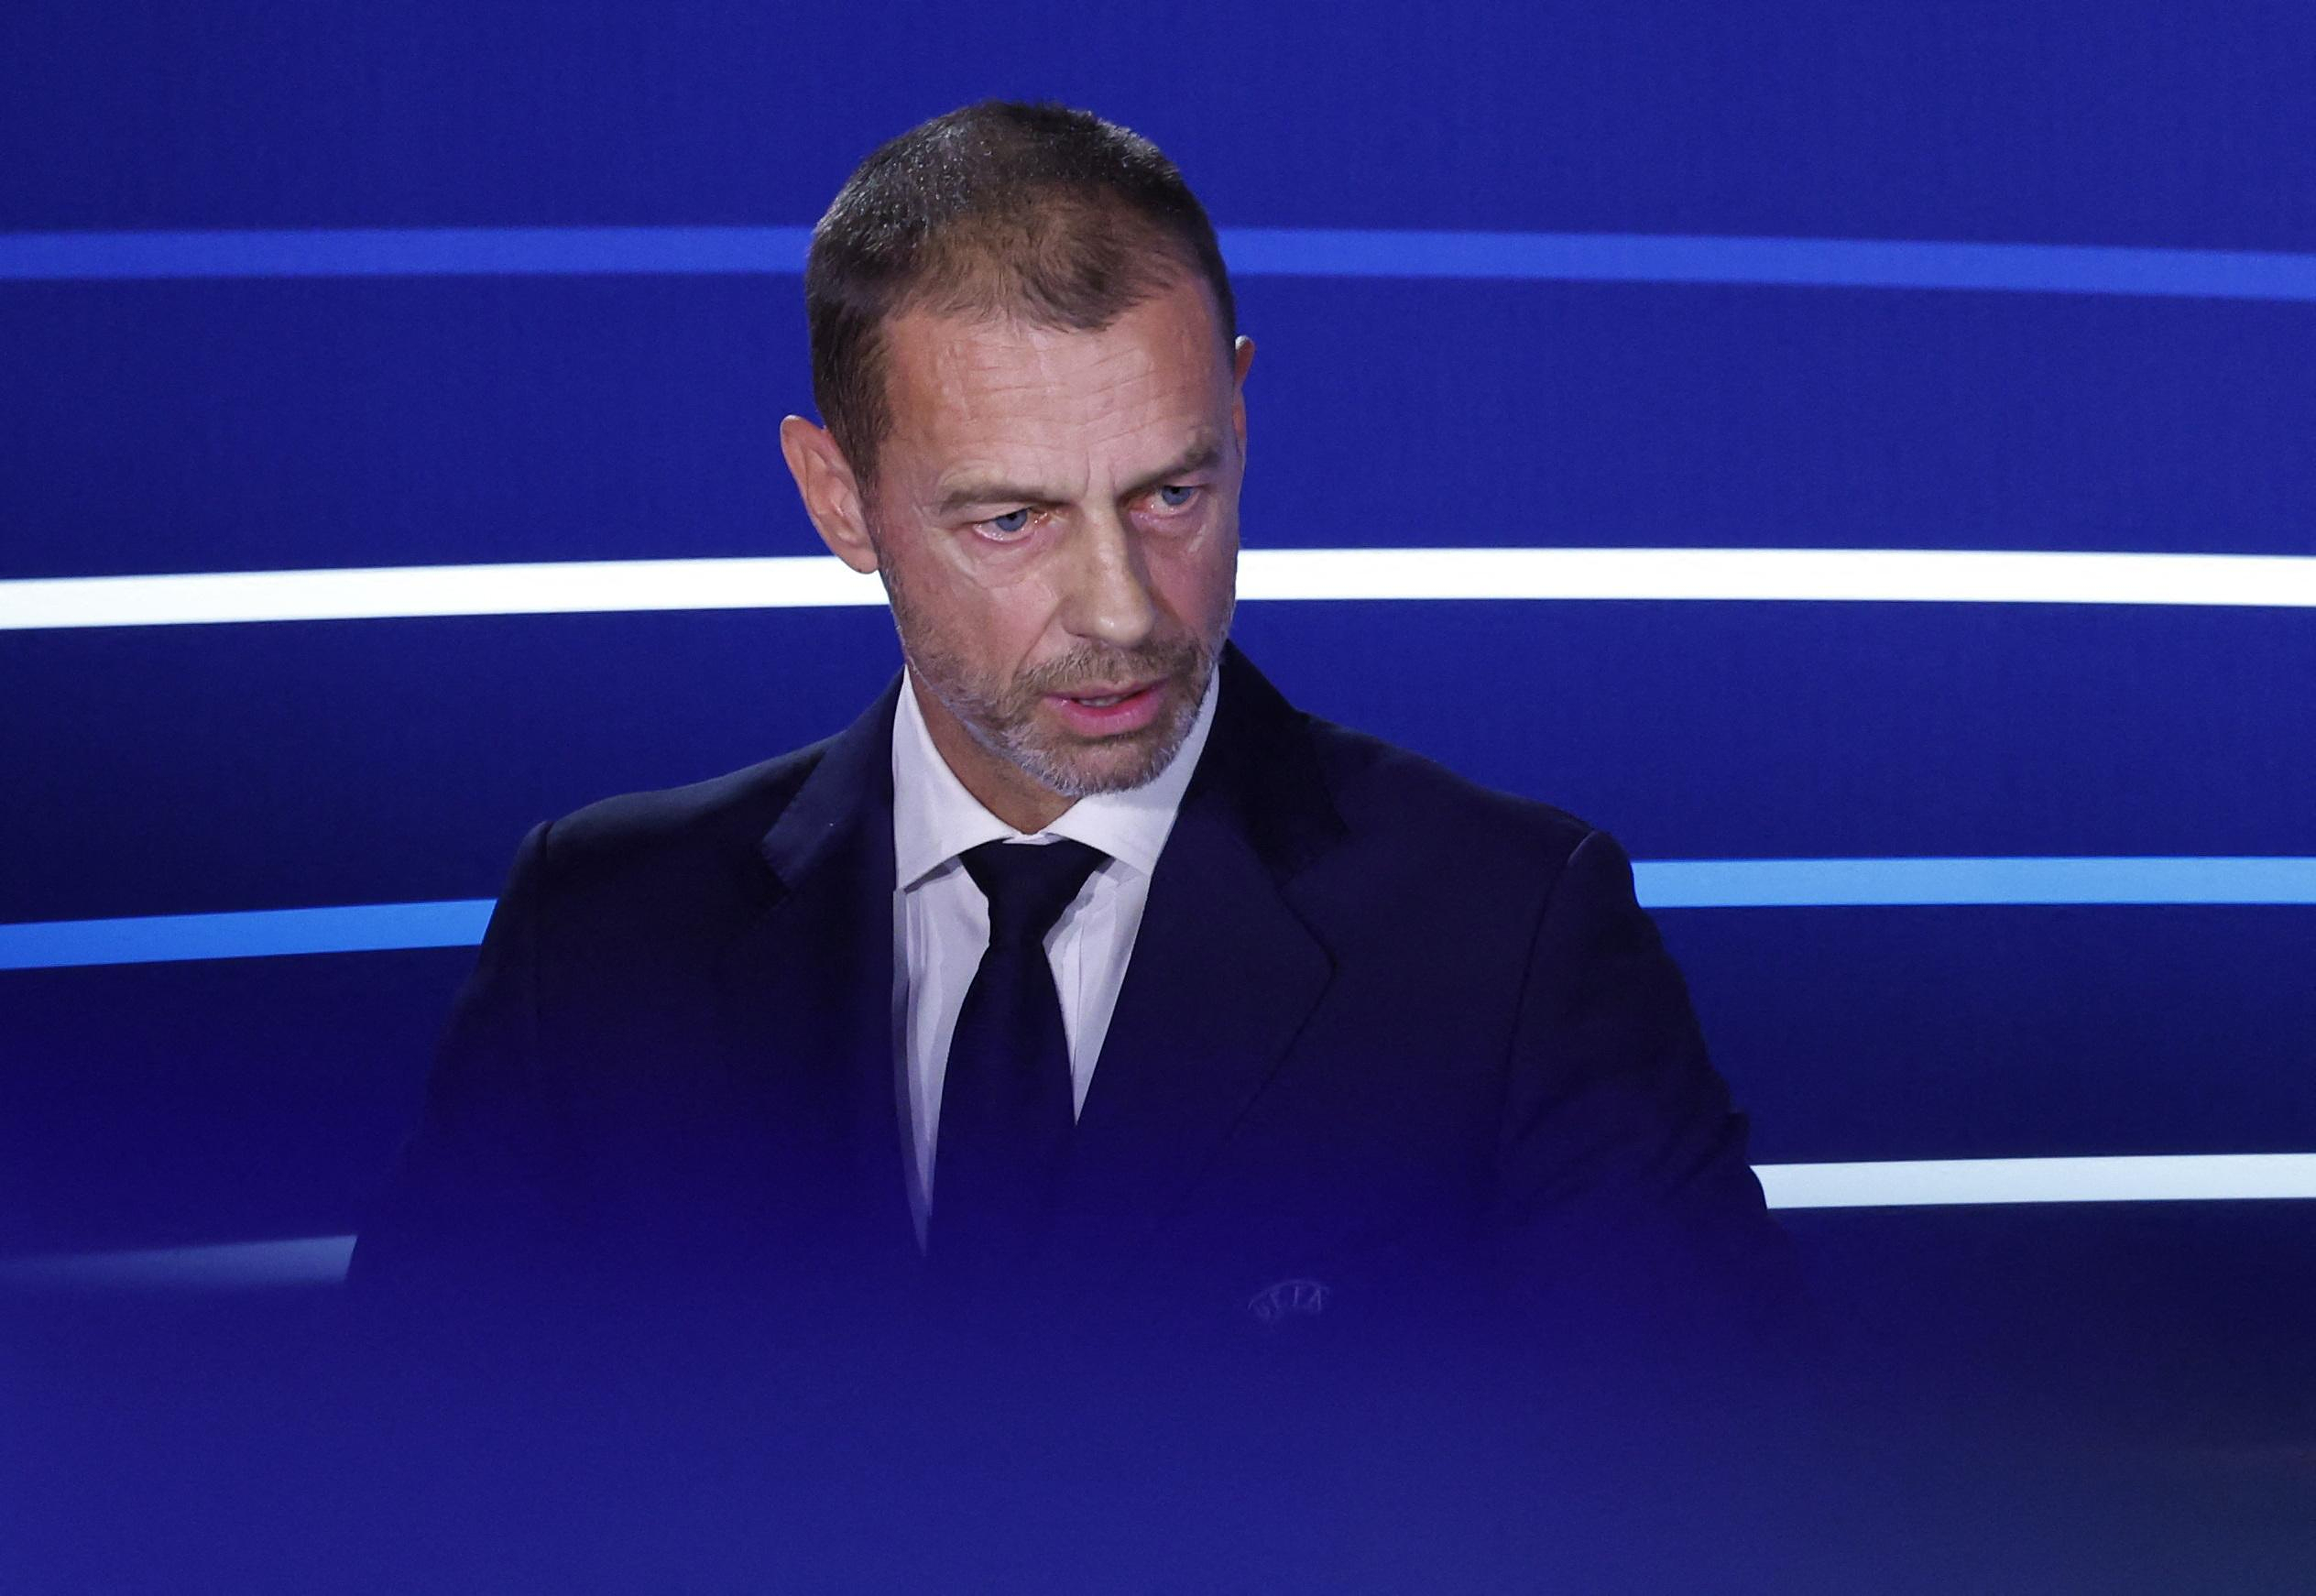 Football: UEFA Congress allows Ceferin to run for president for a 4th term